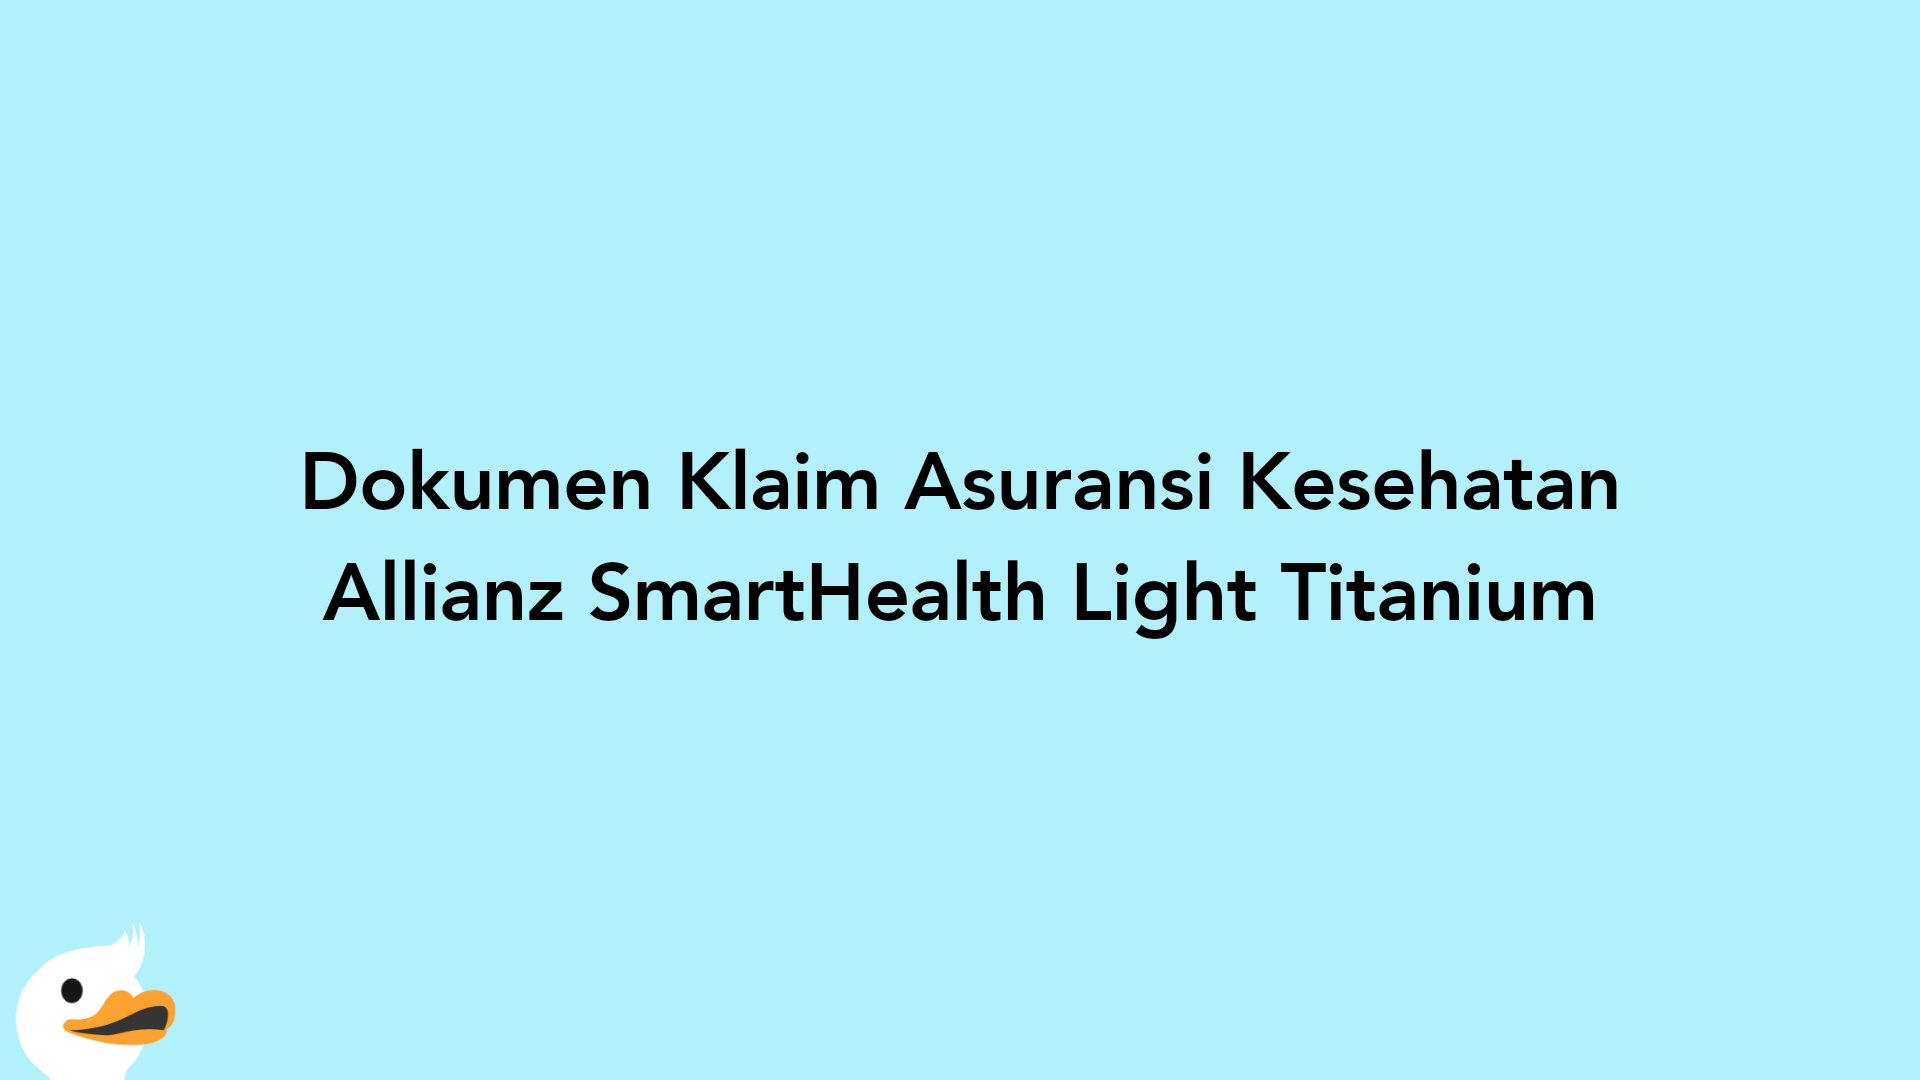 Dokumen Klaim Asuransi Kesehatan Allianz SmartHealth Light Titanium